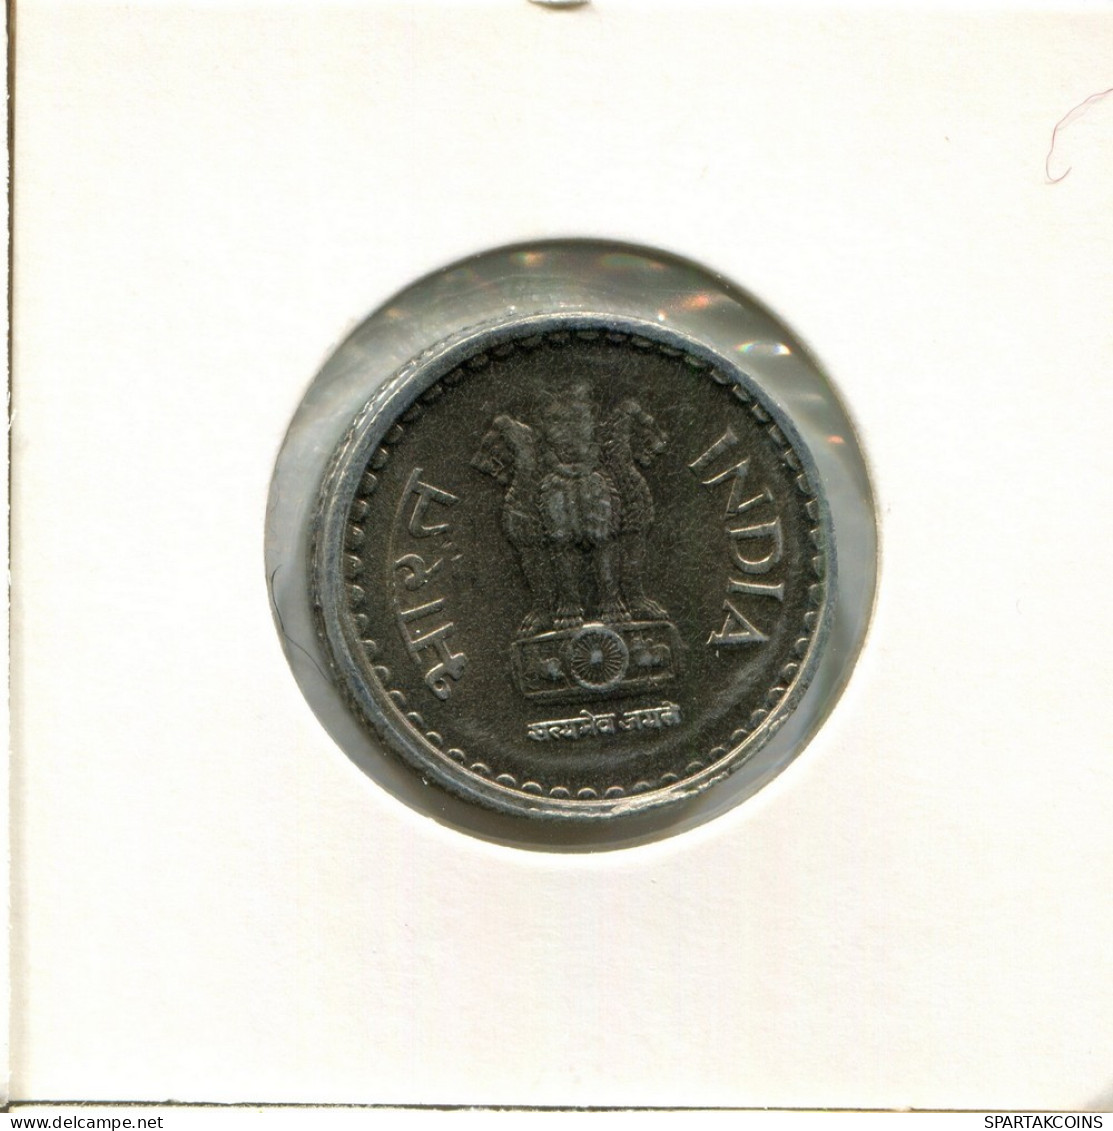 5 RUPEES 1999 INDIA Coin #AY844.U.A - Inde